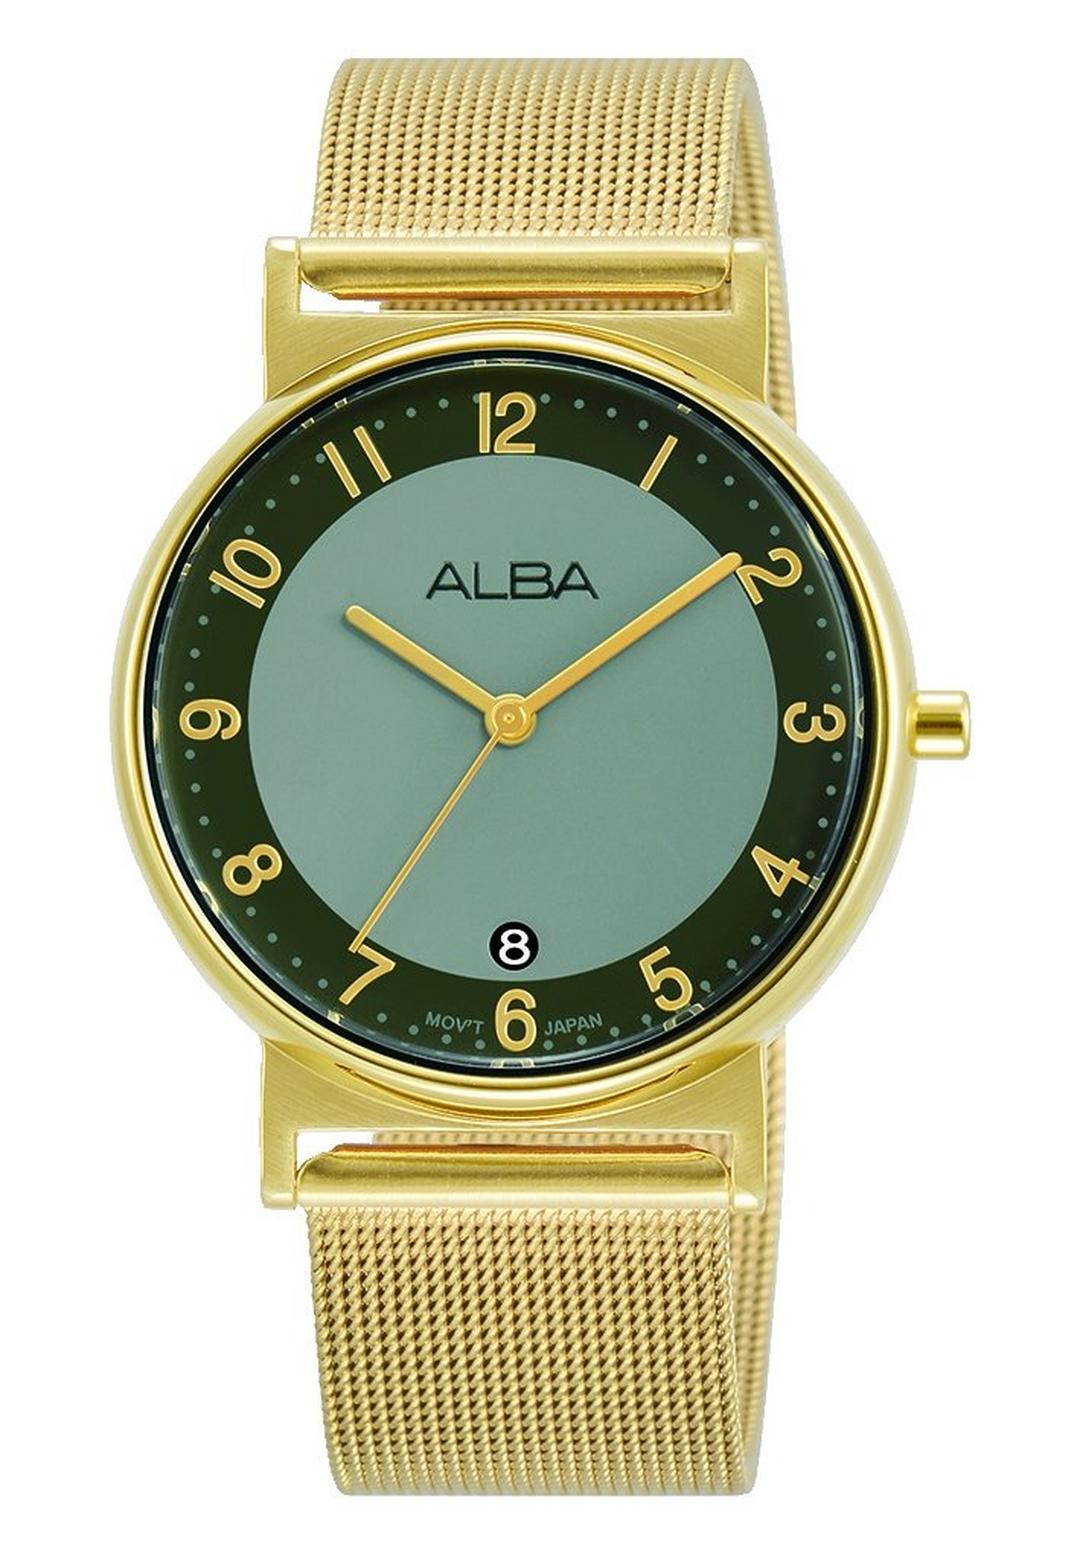 Alba 34mm Analog Ladies Casual Watch - AG8M54X1